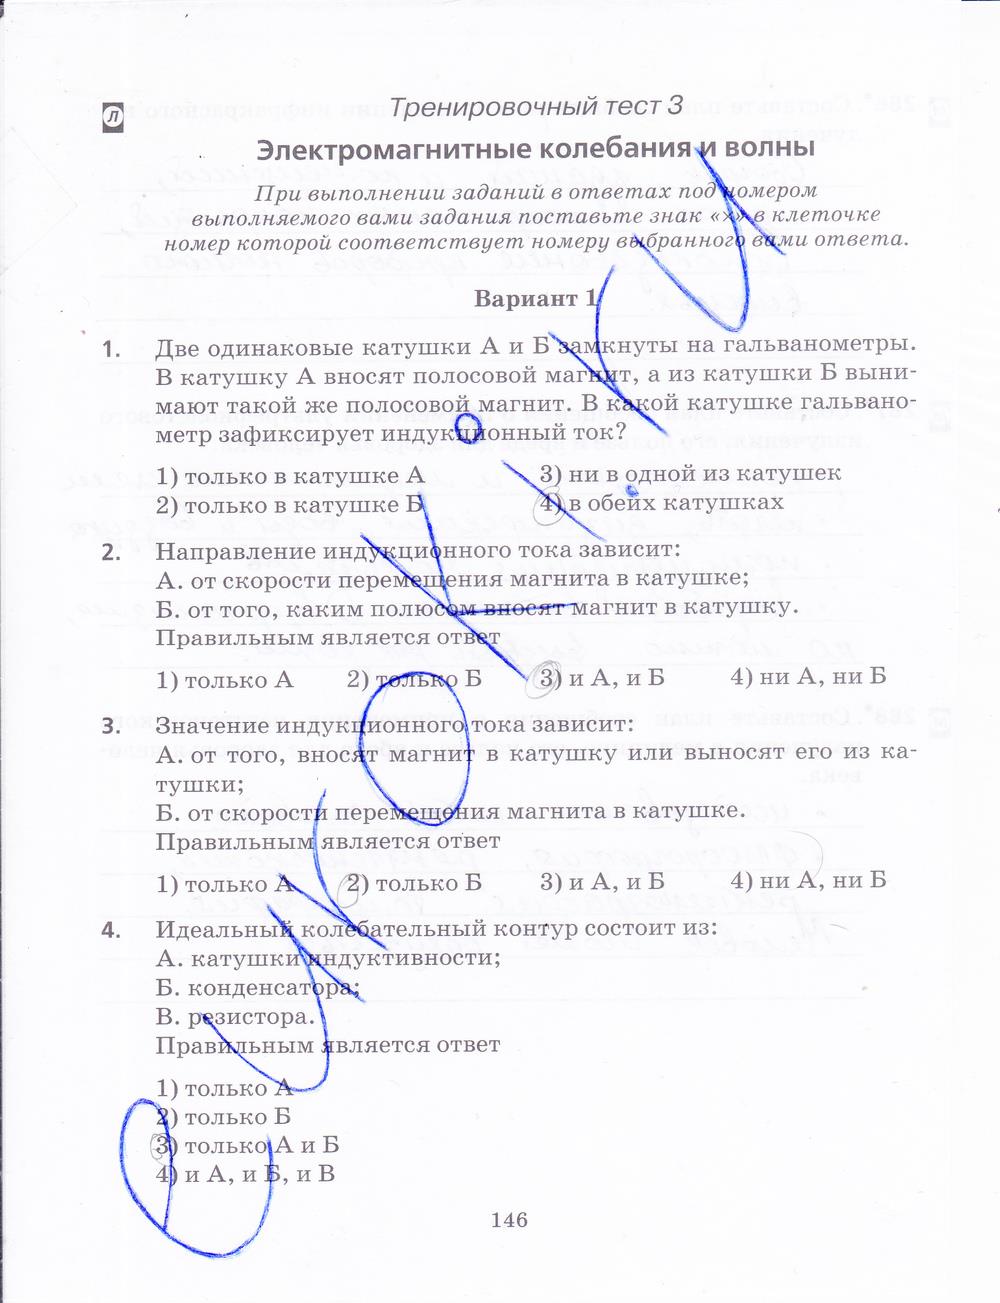 гдз 9 класс рабочая тетрадь страница 146 физика Пурышева, Важеевская, Чаругин